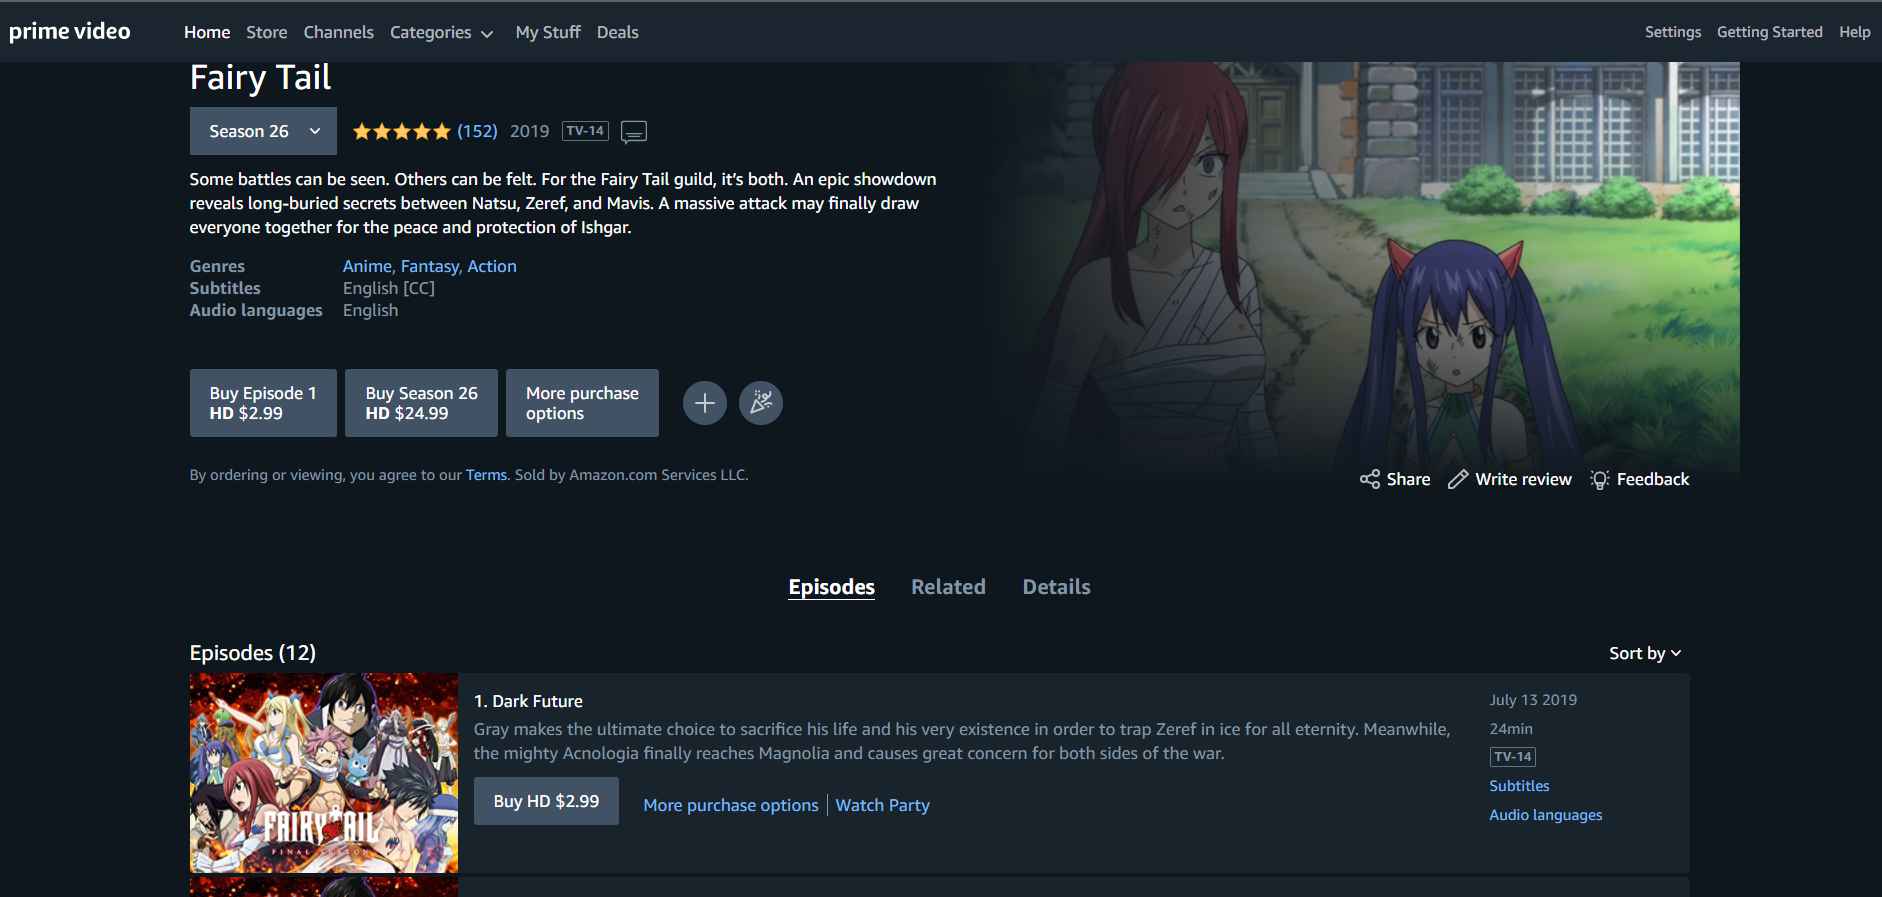 Fairy Tail on Amazon Prime Video